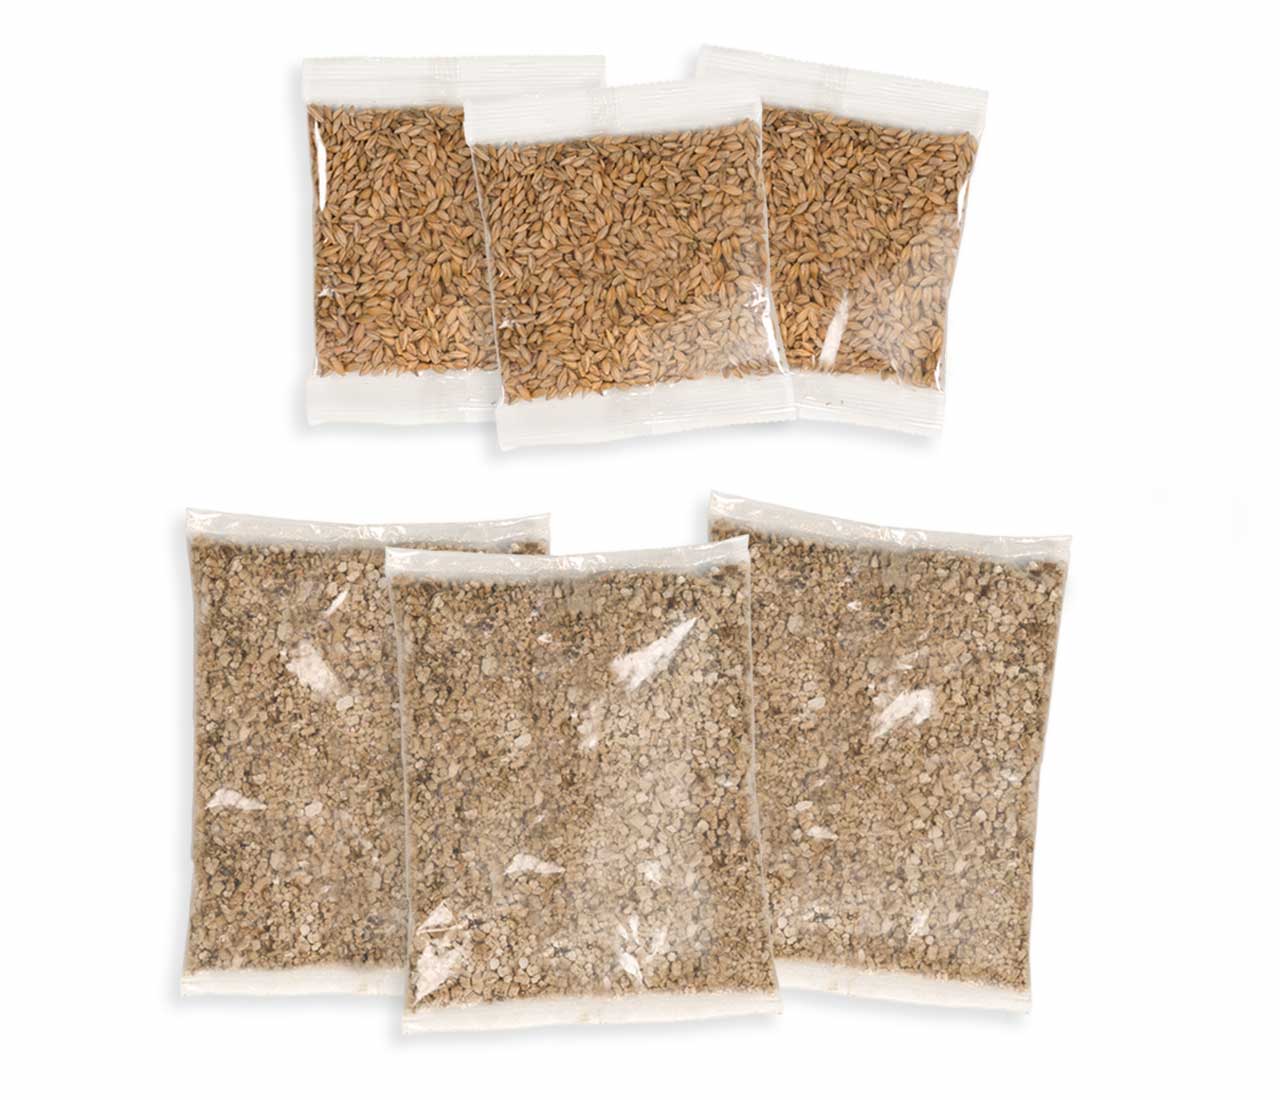 3 zakjes met zaden en 3 zakjes vermiculiet om kattengras te kweken